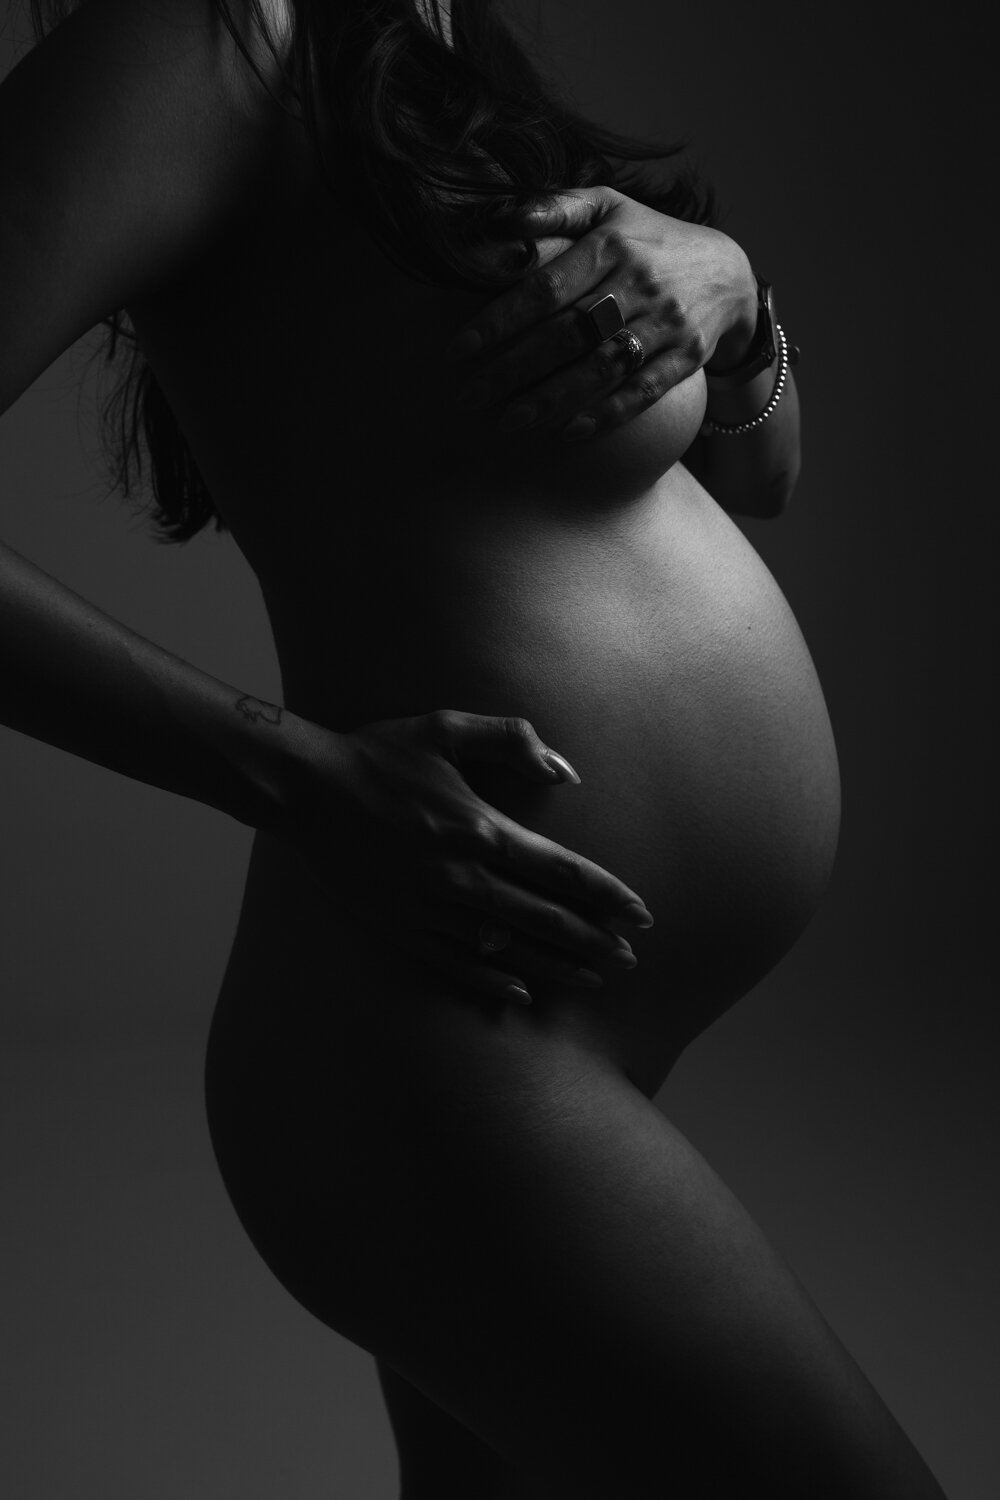 corse corsica photograph photographe photographer europe Krista Espino france french ajaccio maternity grossesse pregnancy pregnant enceinte family famille studio portrait Anza Creative.jpg